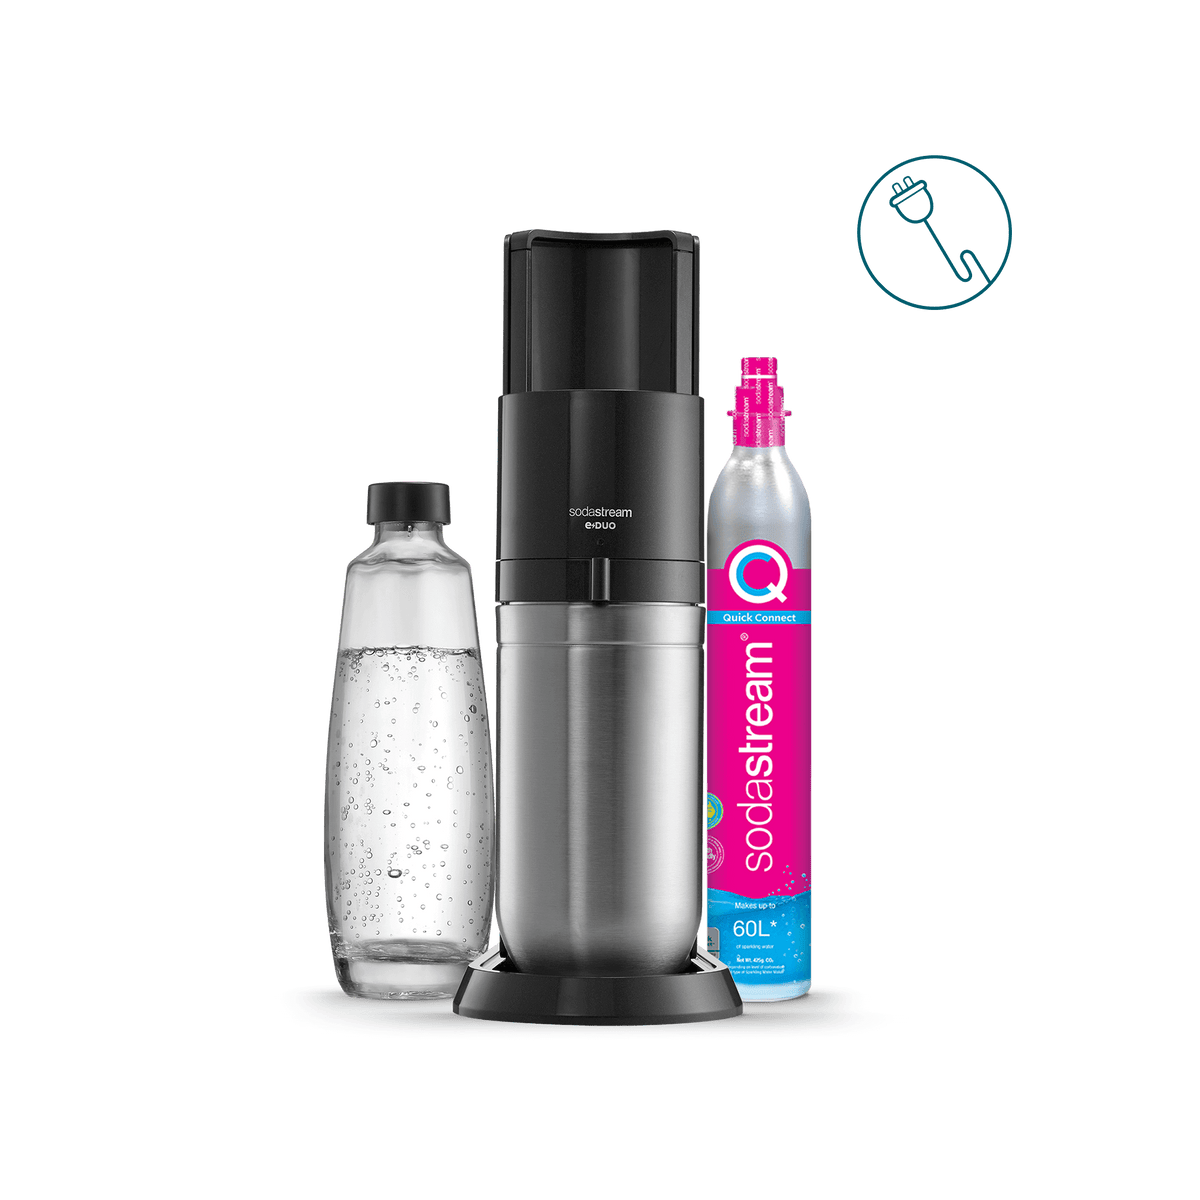 SodaStream E-DUO Water Maker Sparkling